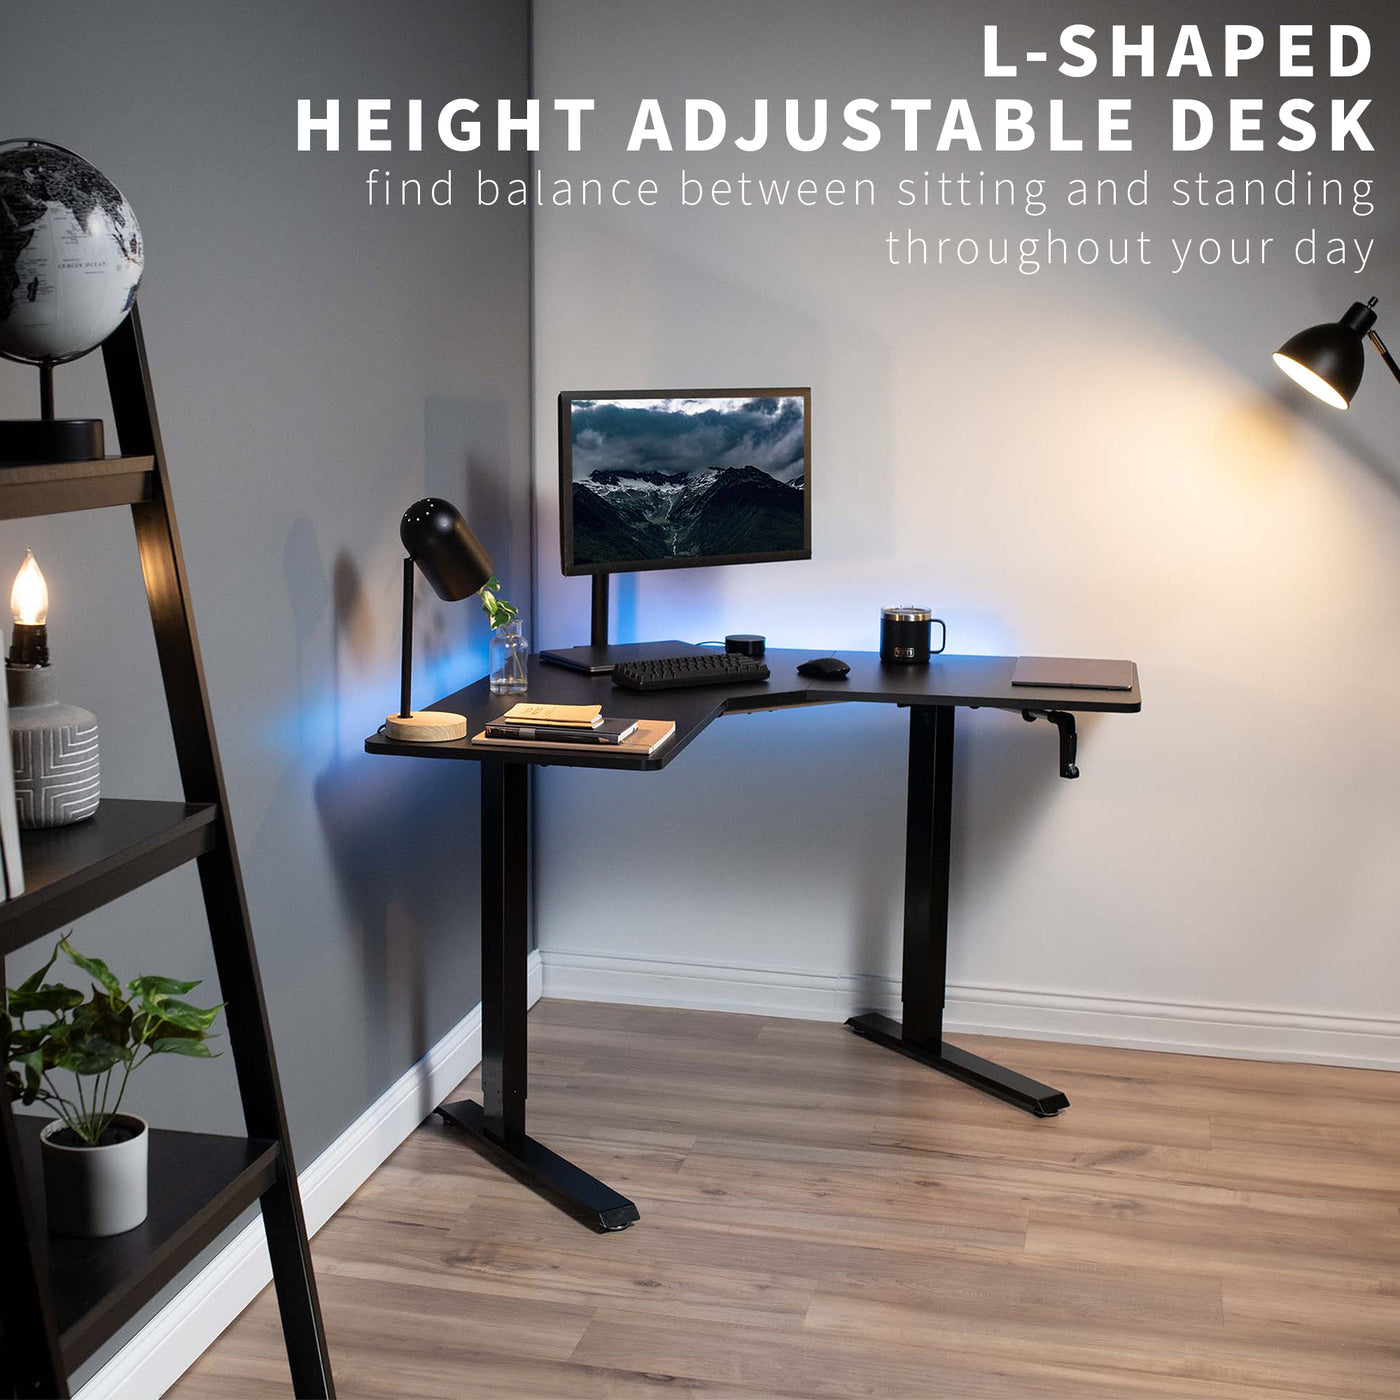 Heavy-duty manual hand crank adjustable height corner desk workstation for active sit or stand efficient workspace.